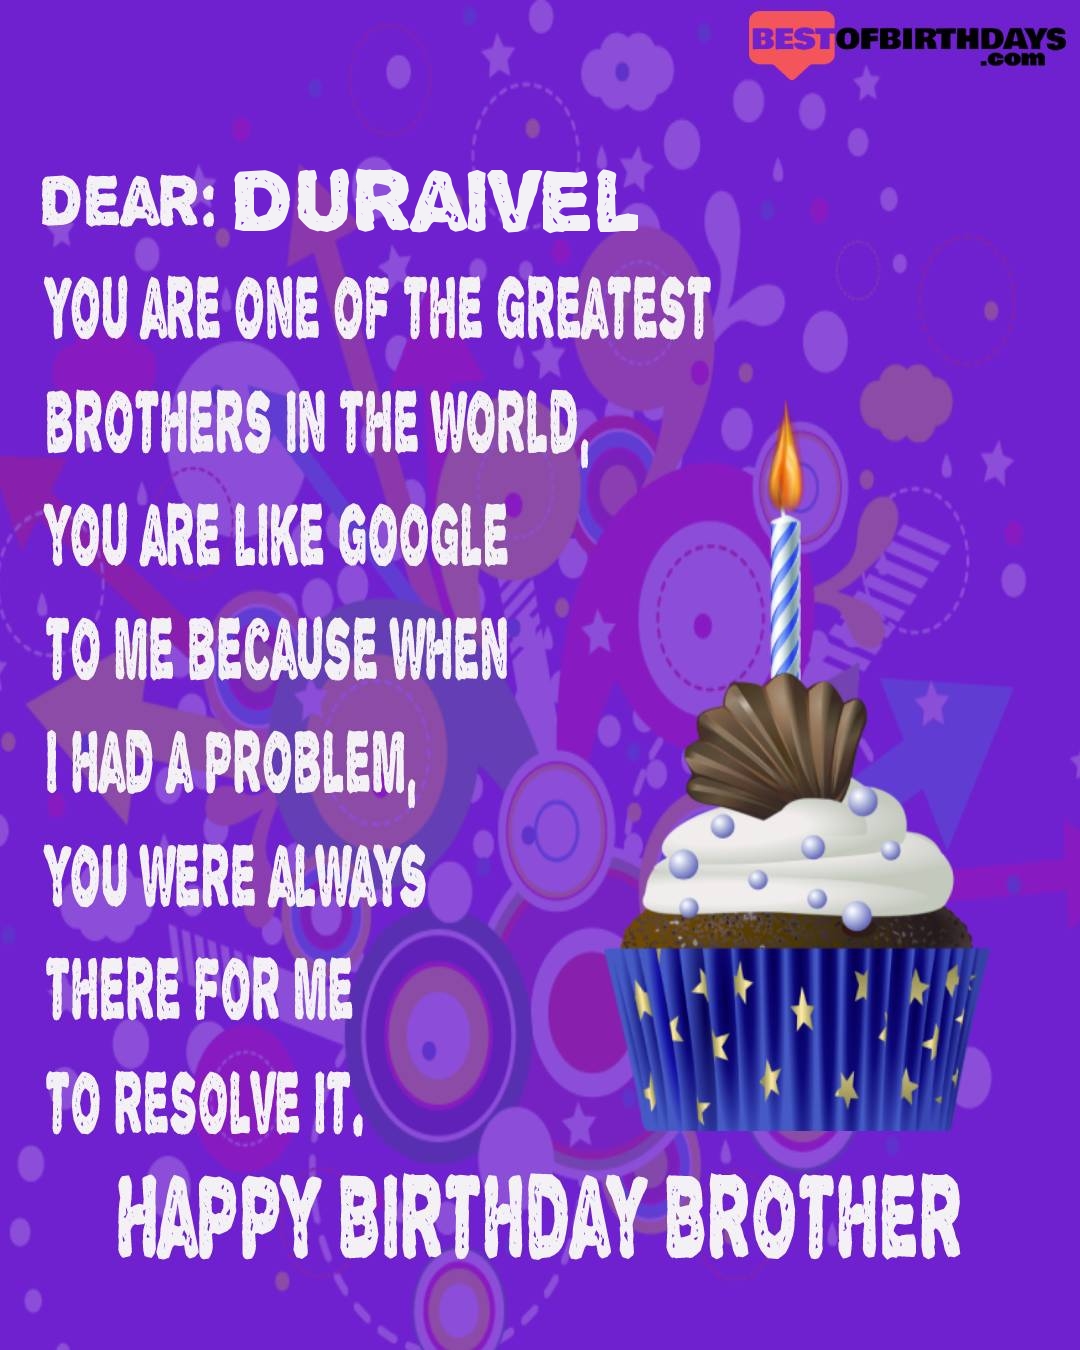 Happy birthday duraivel bhai brother bro